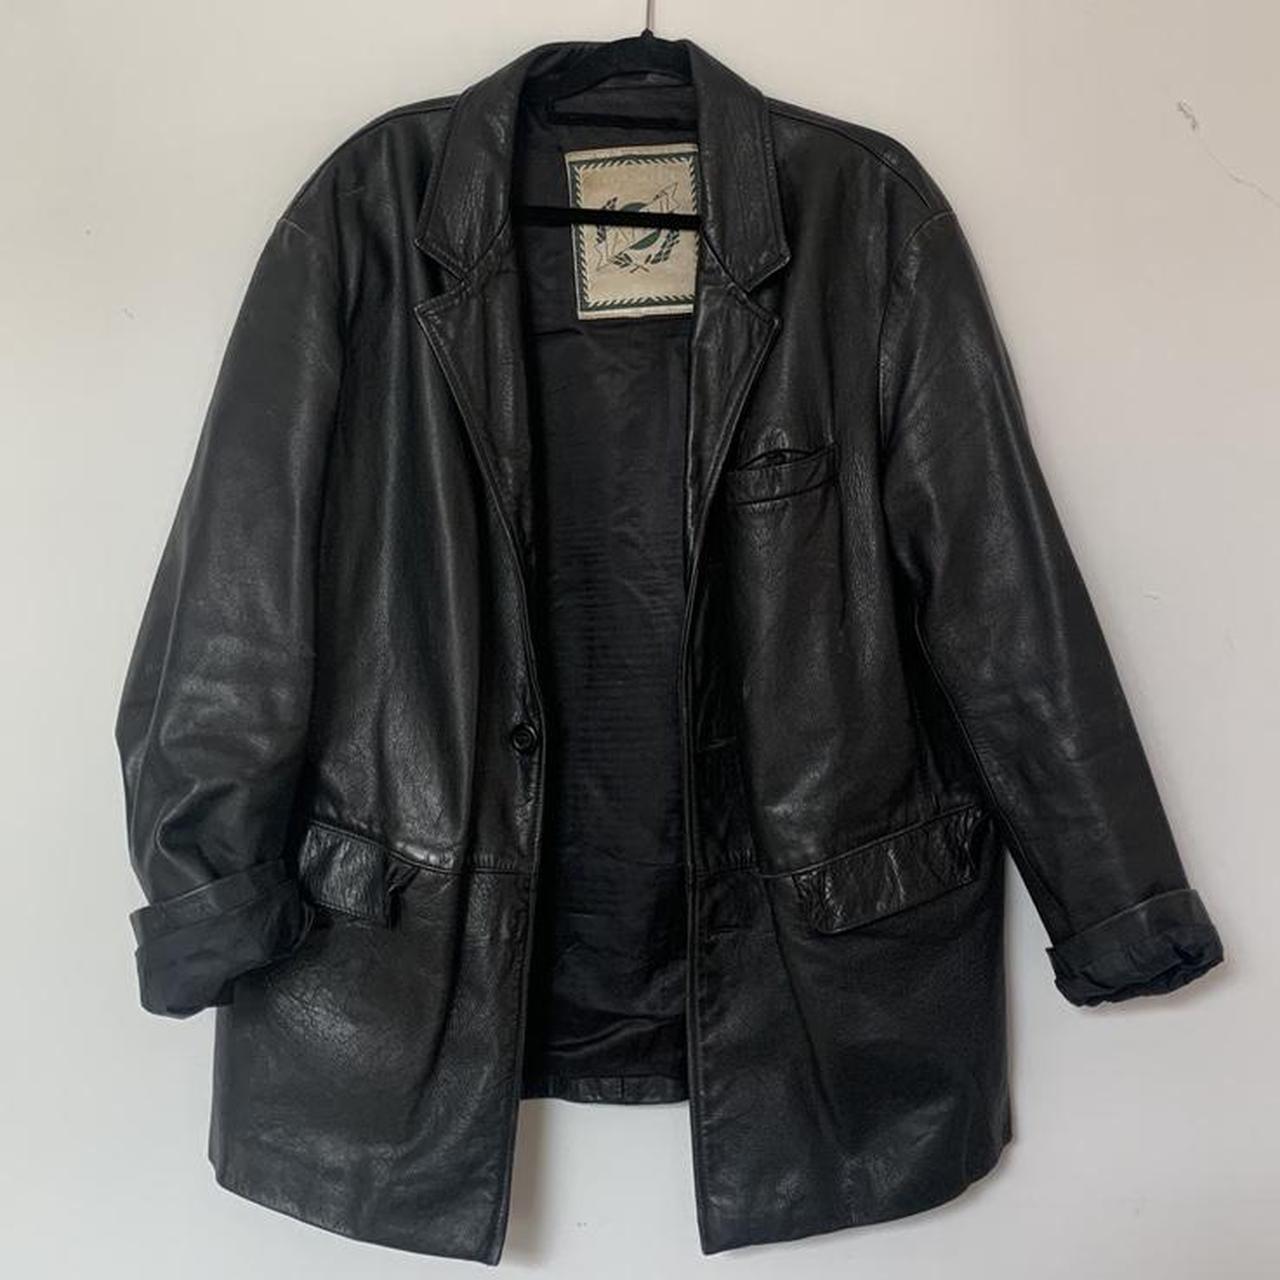 Vintage genuine leather jacket - Depop